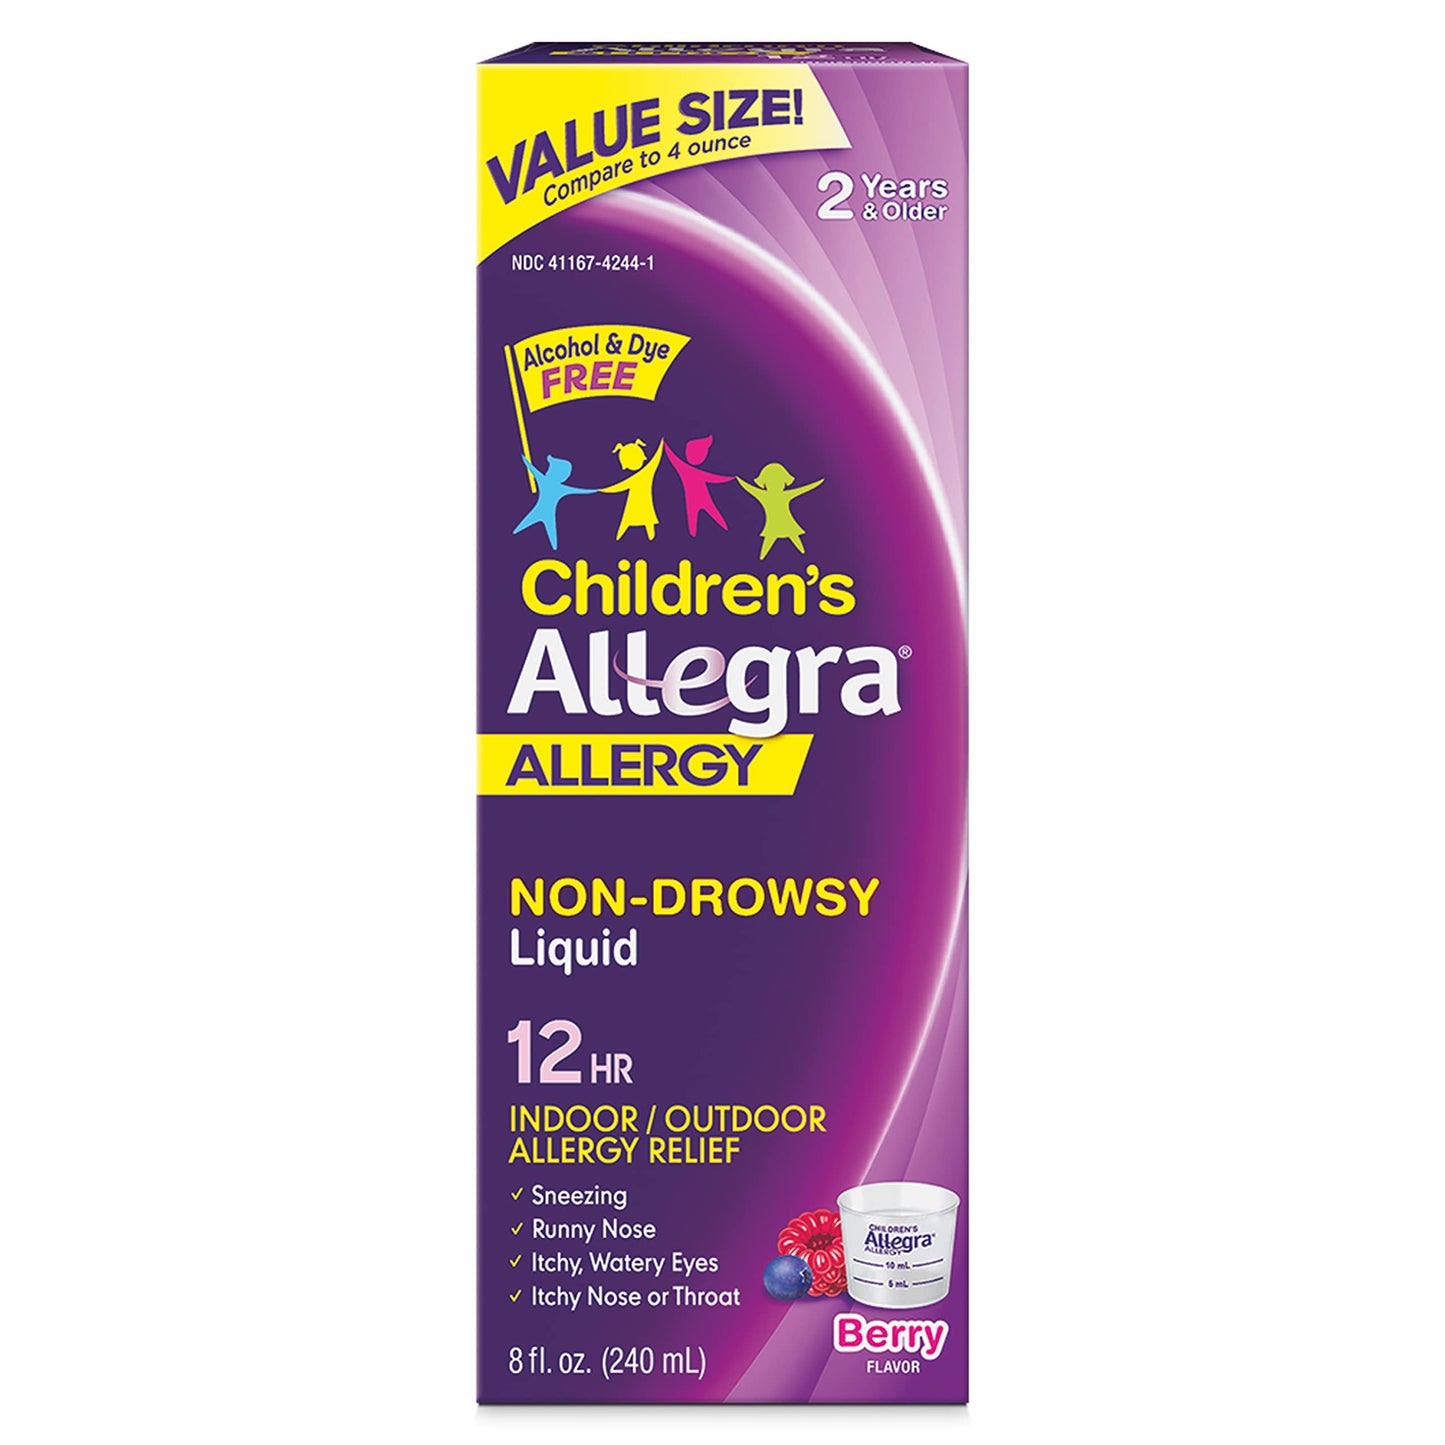 Allegra Children's 12HR Allergy Relief Non-drowsy Antihistamine Liquid, Berry Flavor, Alcohol-Free & Dye-Free, Fexofenadine HCl, 8 oz.